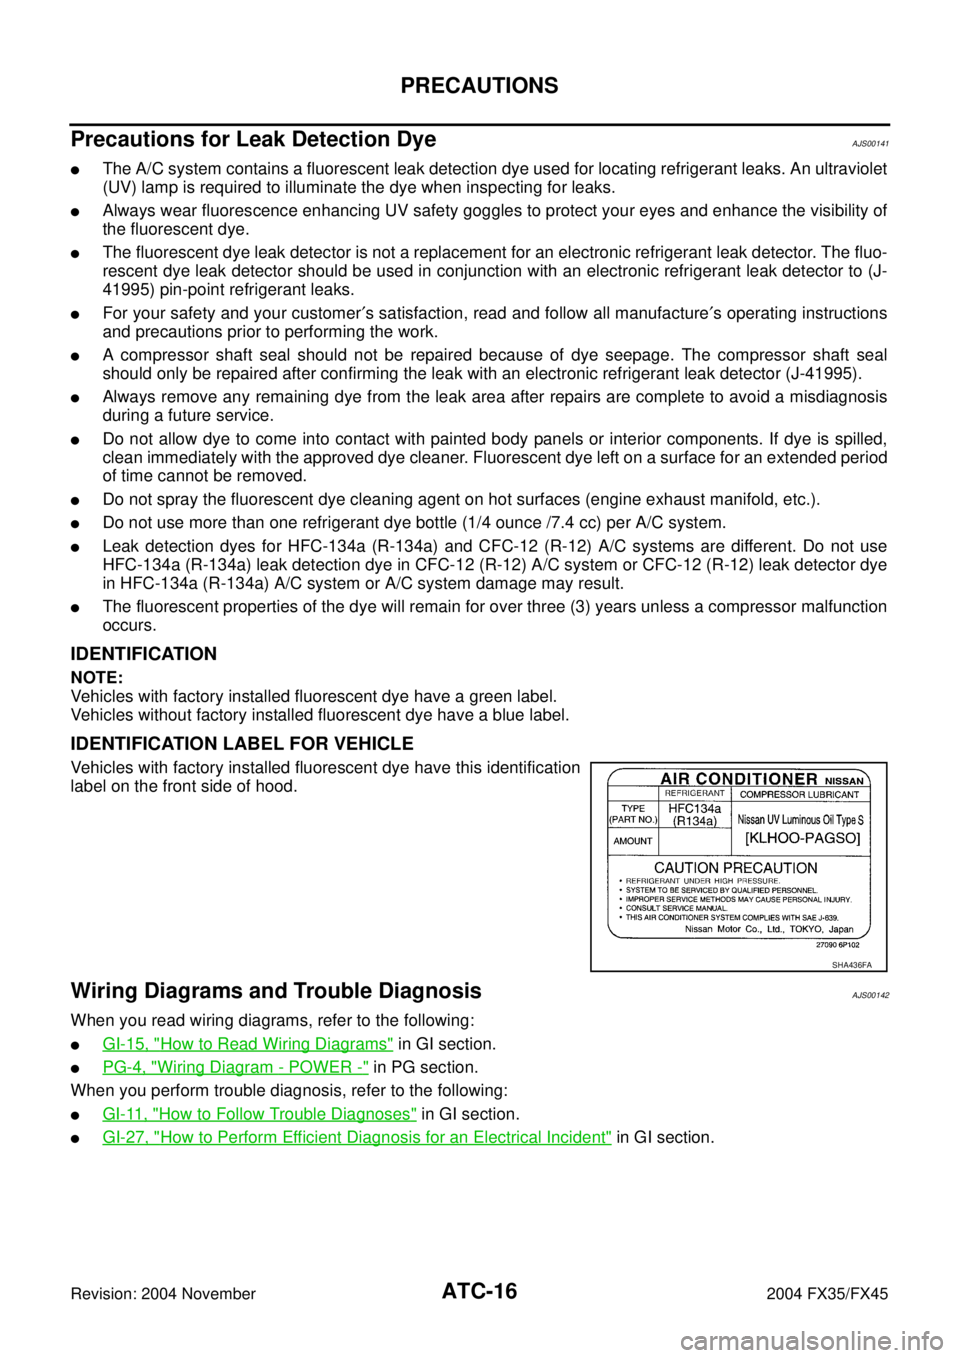 INFINITI FX35 2004  Service Manual ATC-16
PRECAUTIONS
Revision: 2004 November 2004 FX35/FX45
Precautions for Leak Detection DyeAJS00141
The A/C system contains a fluorescent leak detection dye used for locating refrigerant leaks. An u